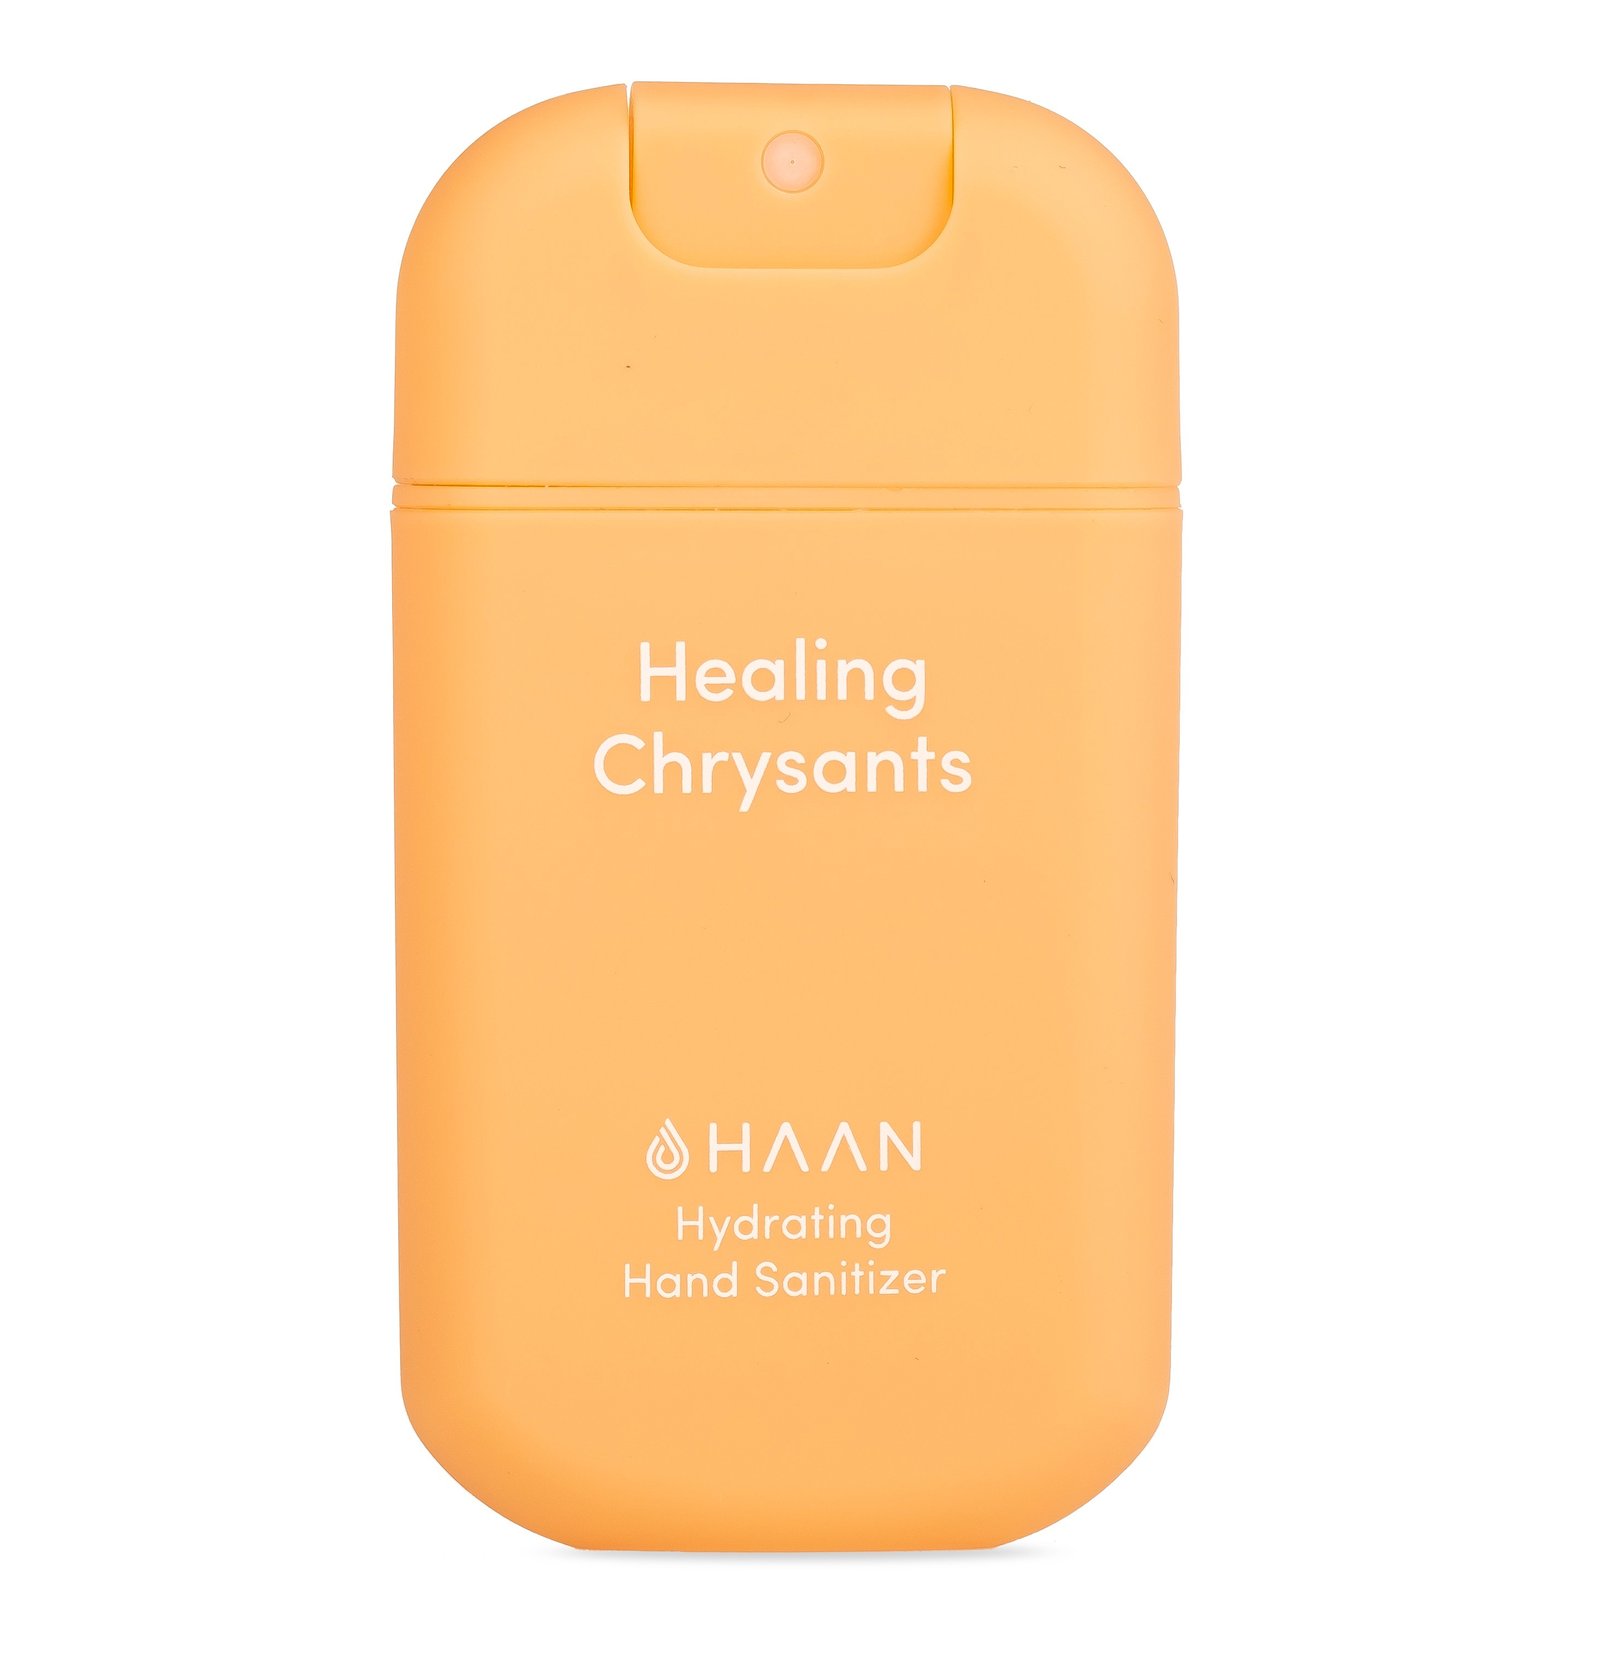 HAAN Healing Chrysants Hydrating Pocket Hand Sanitizer 30 ml